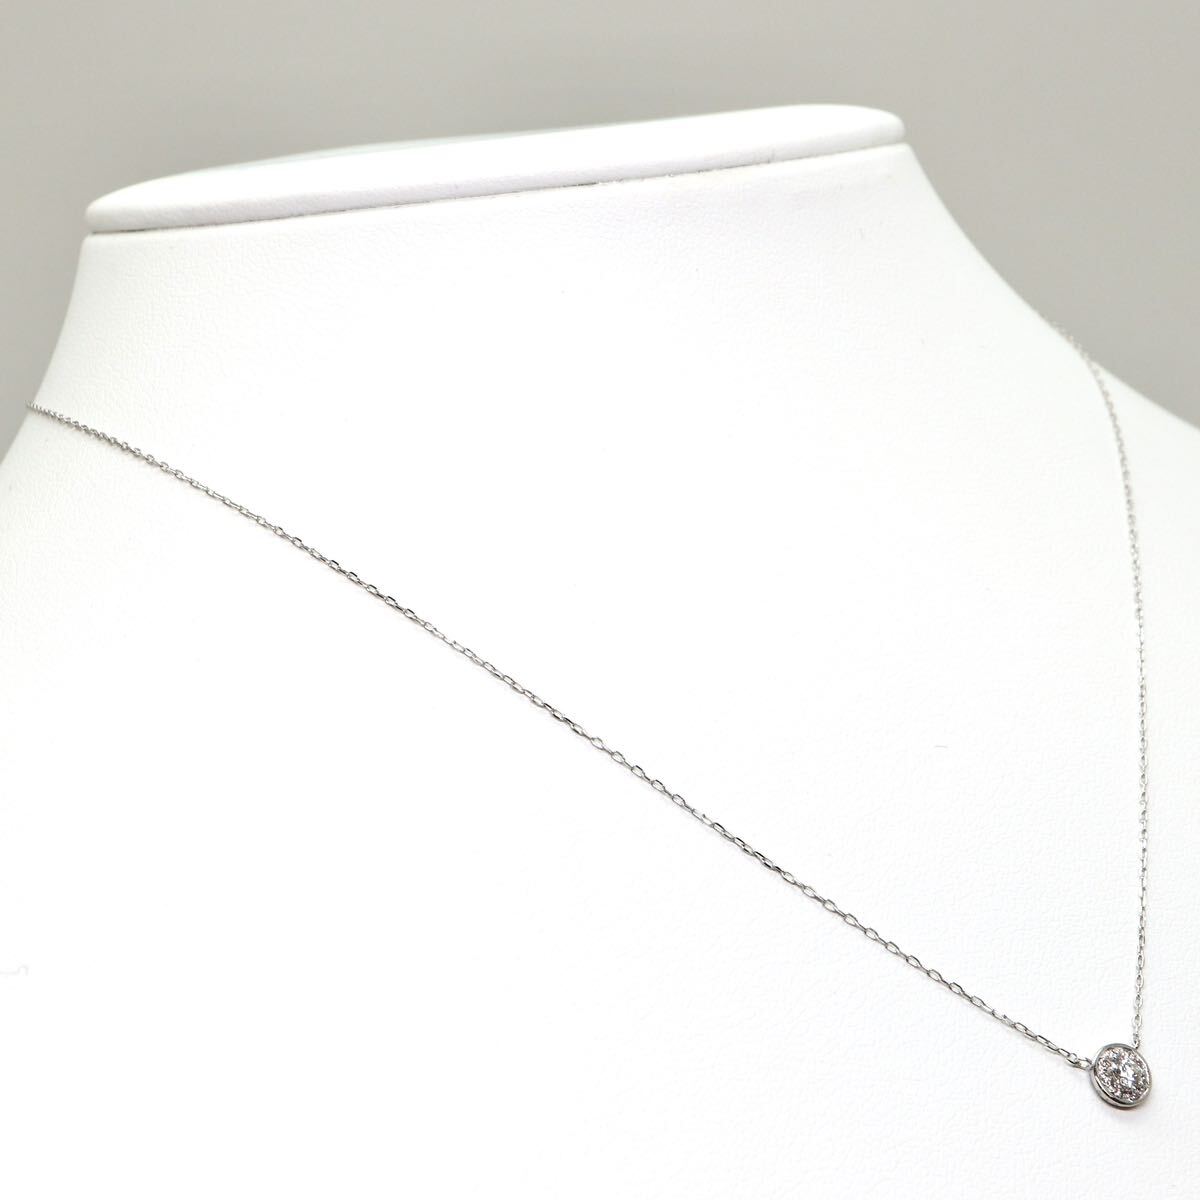 ◆K18 天然ダイヤモンドネックレス◆M 約0.9g 約40.5cm diamond necklace jewelry ジュエリー DH6/DH6の画像3